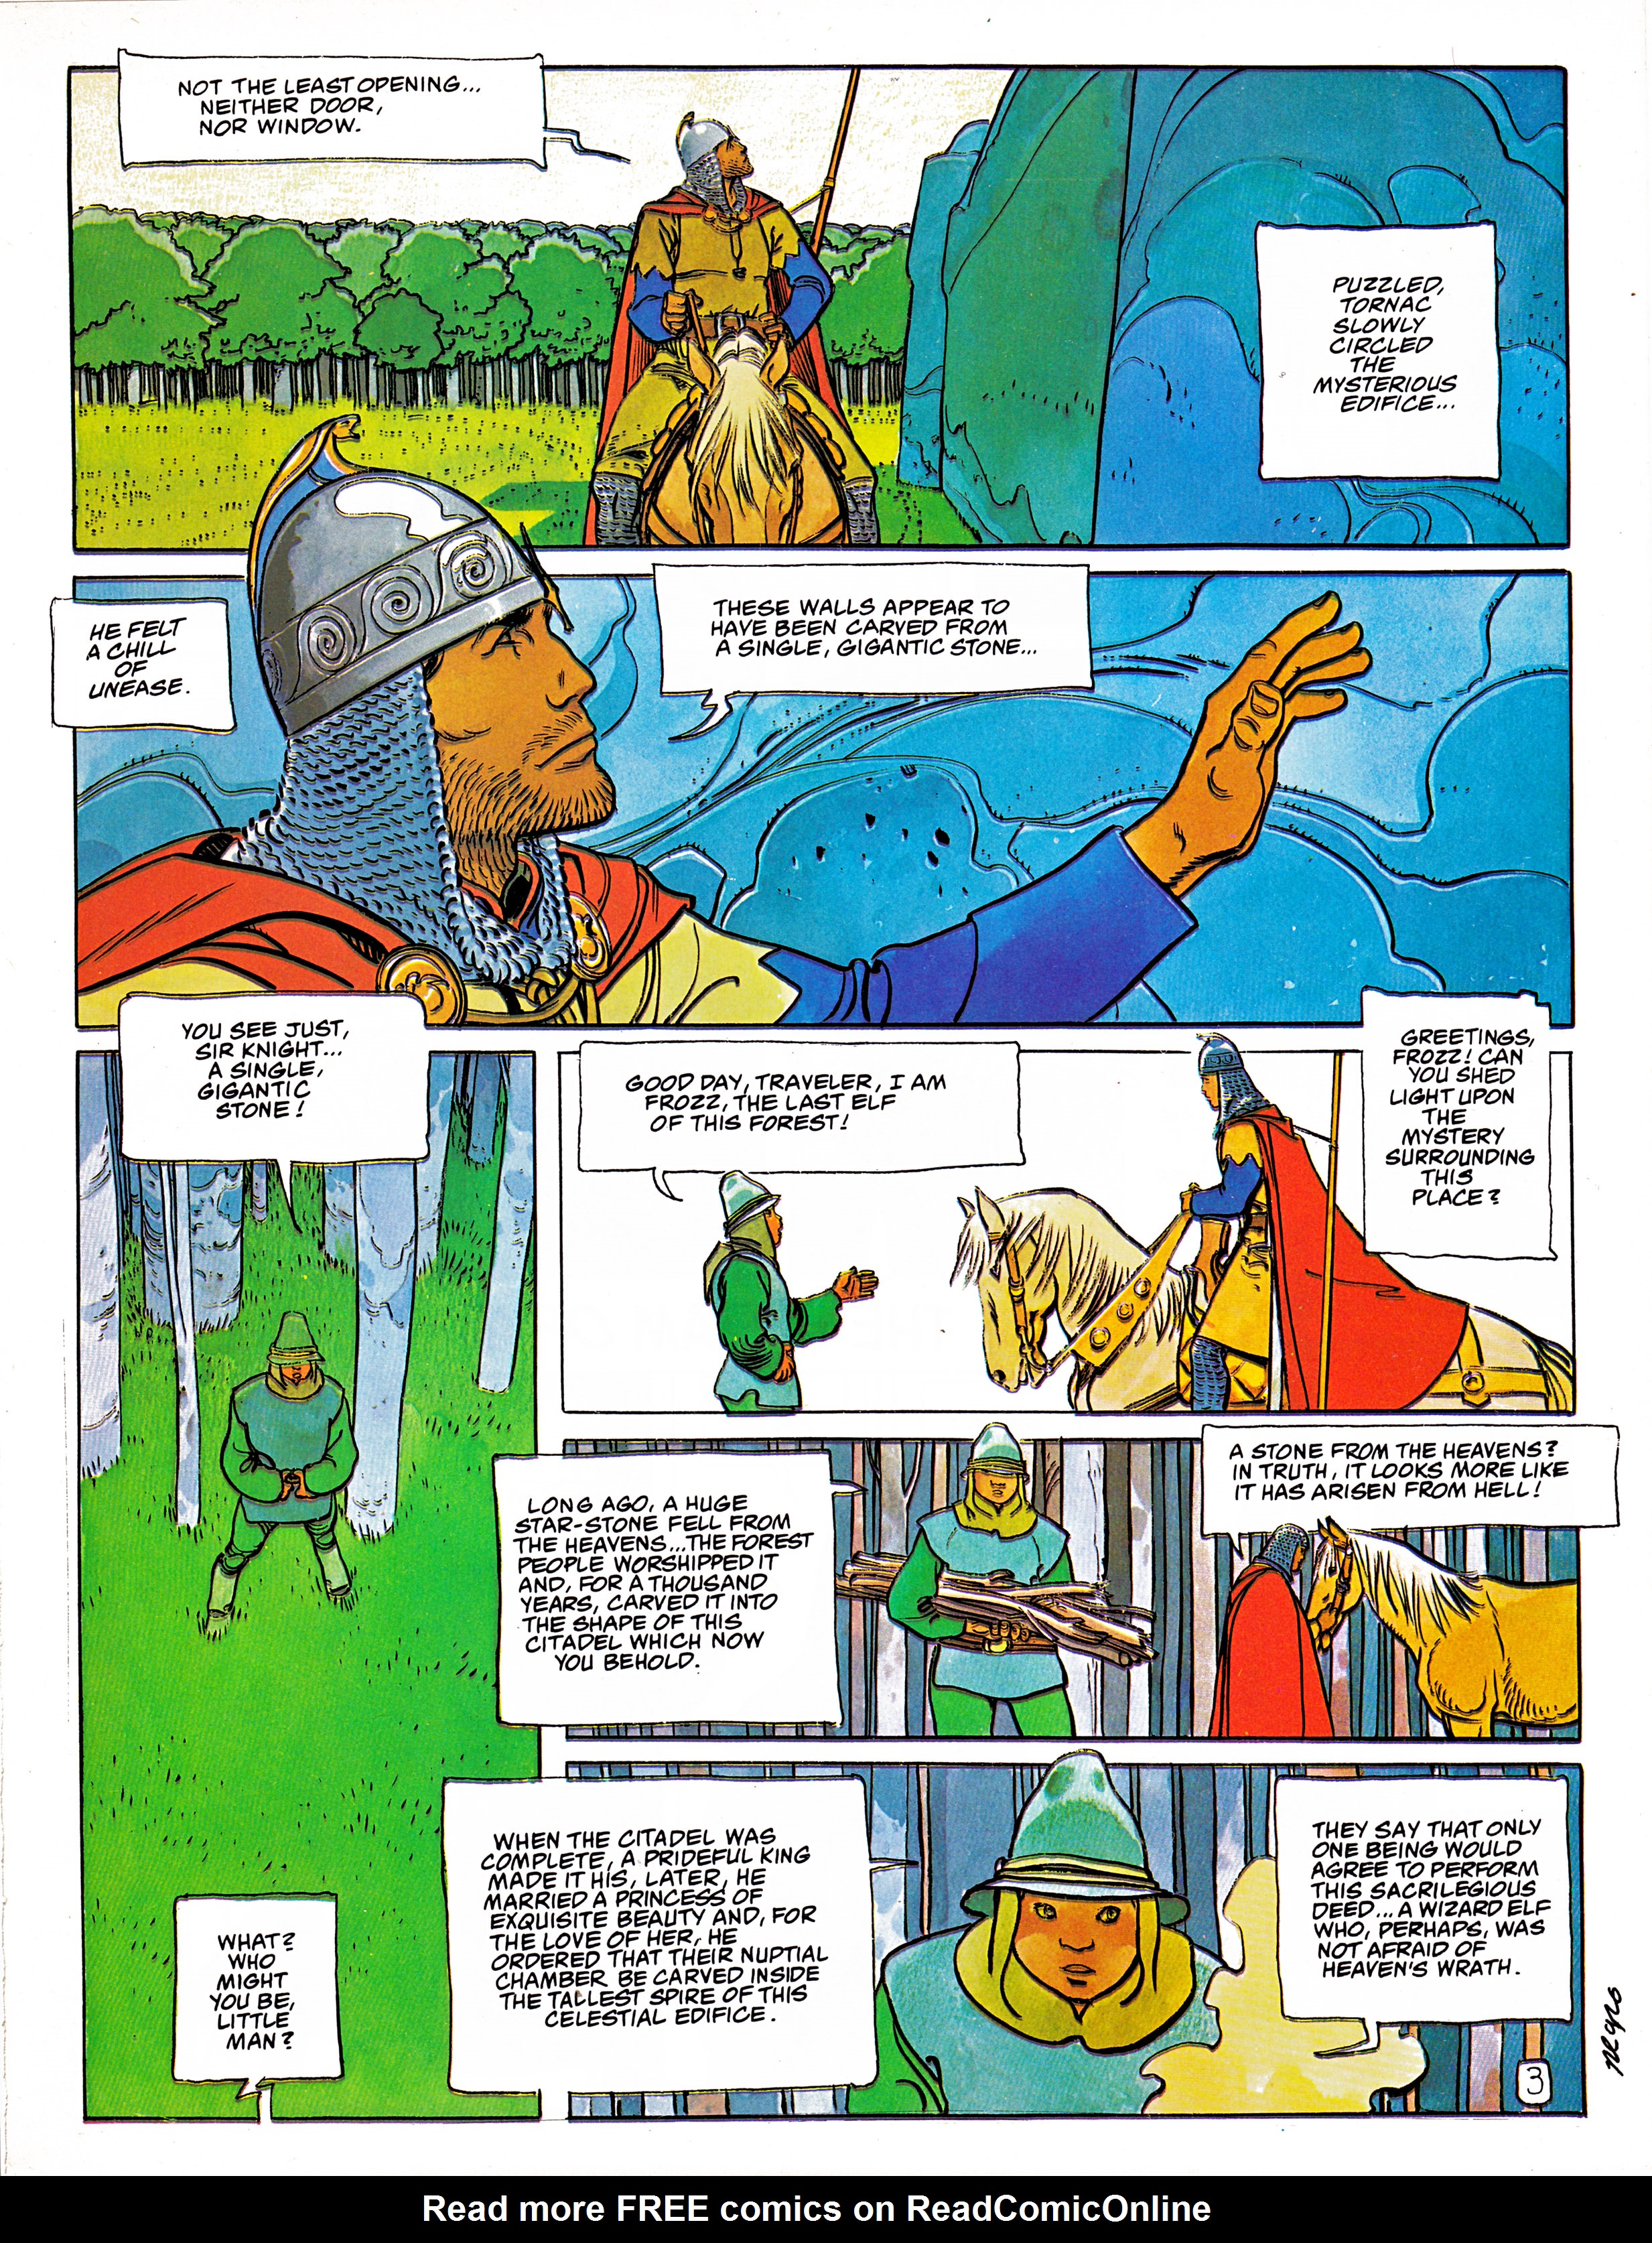 Read online Epic Graphic Novel: Moebius comic -  Issue # TPB 2 - 60